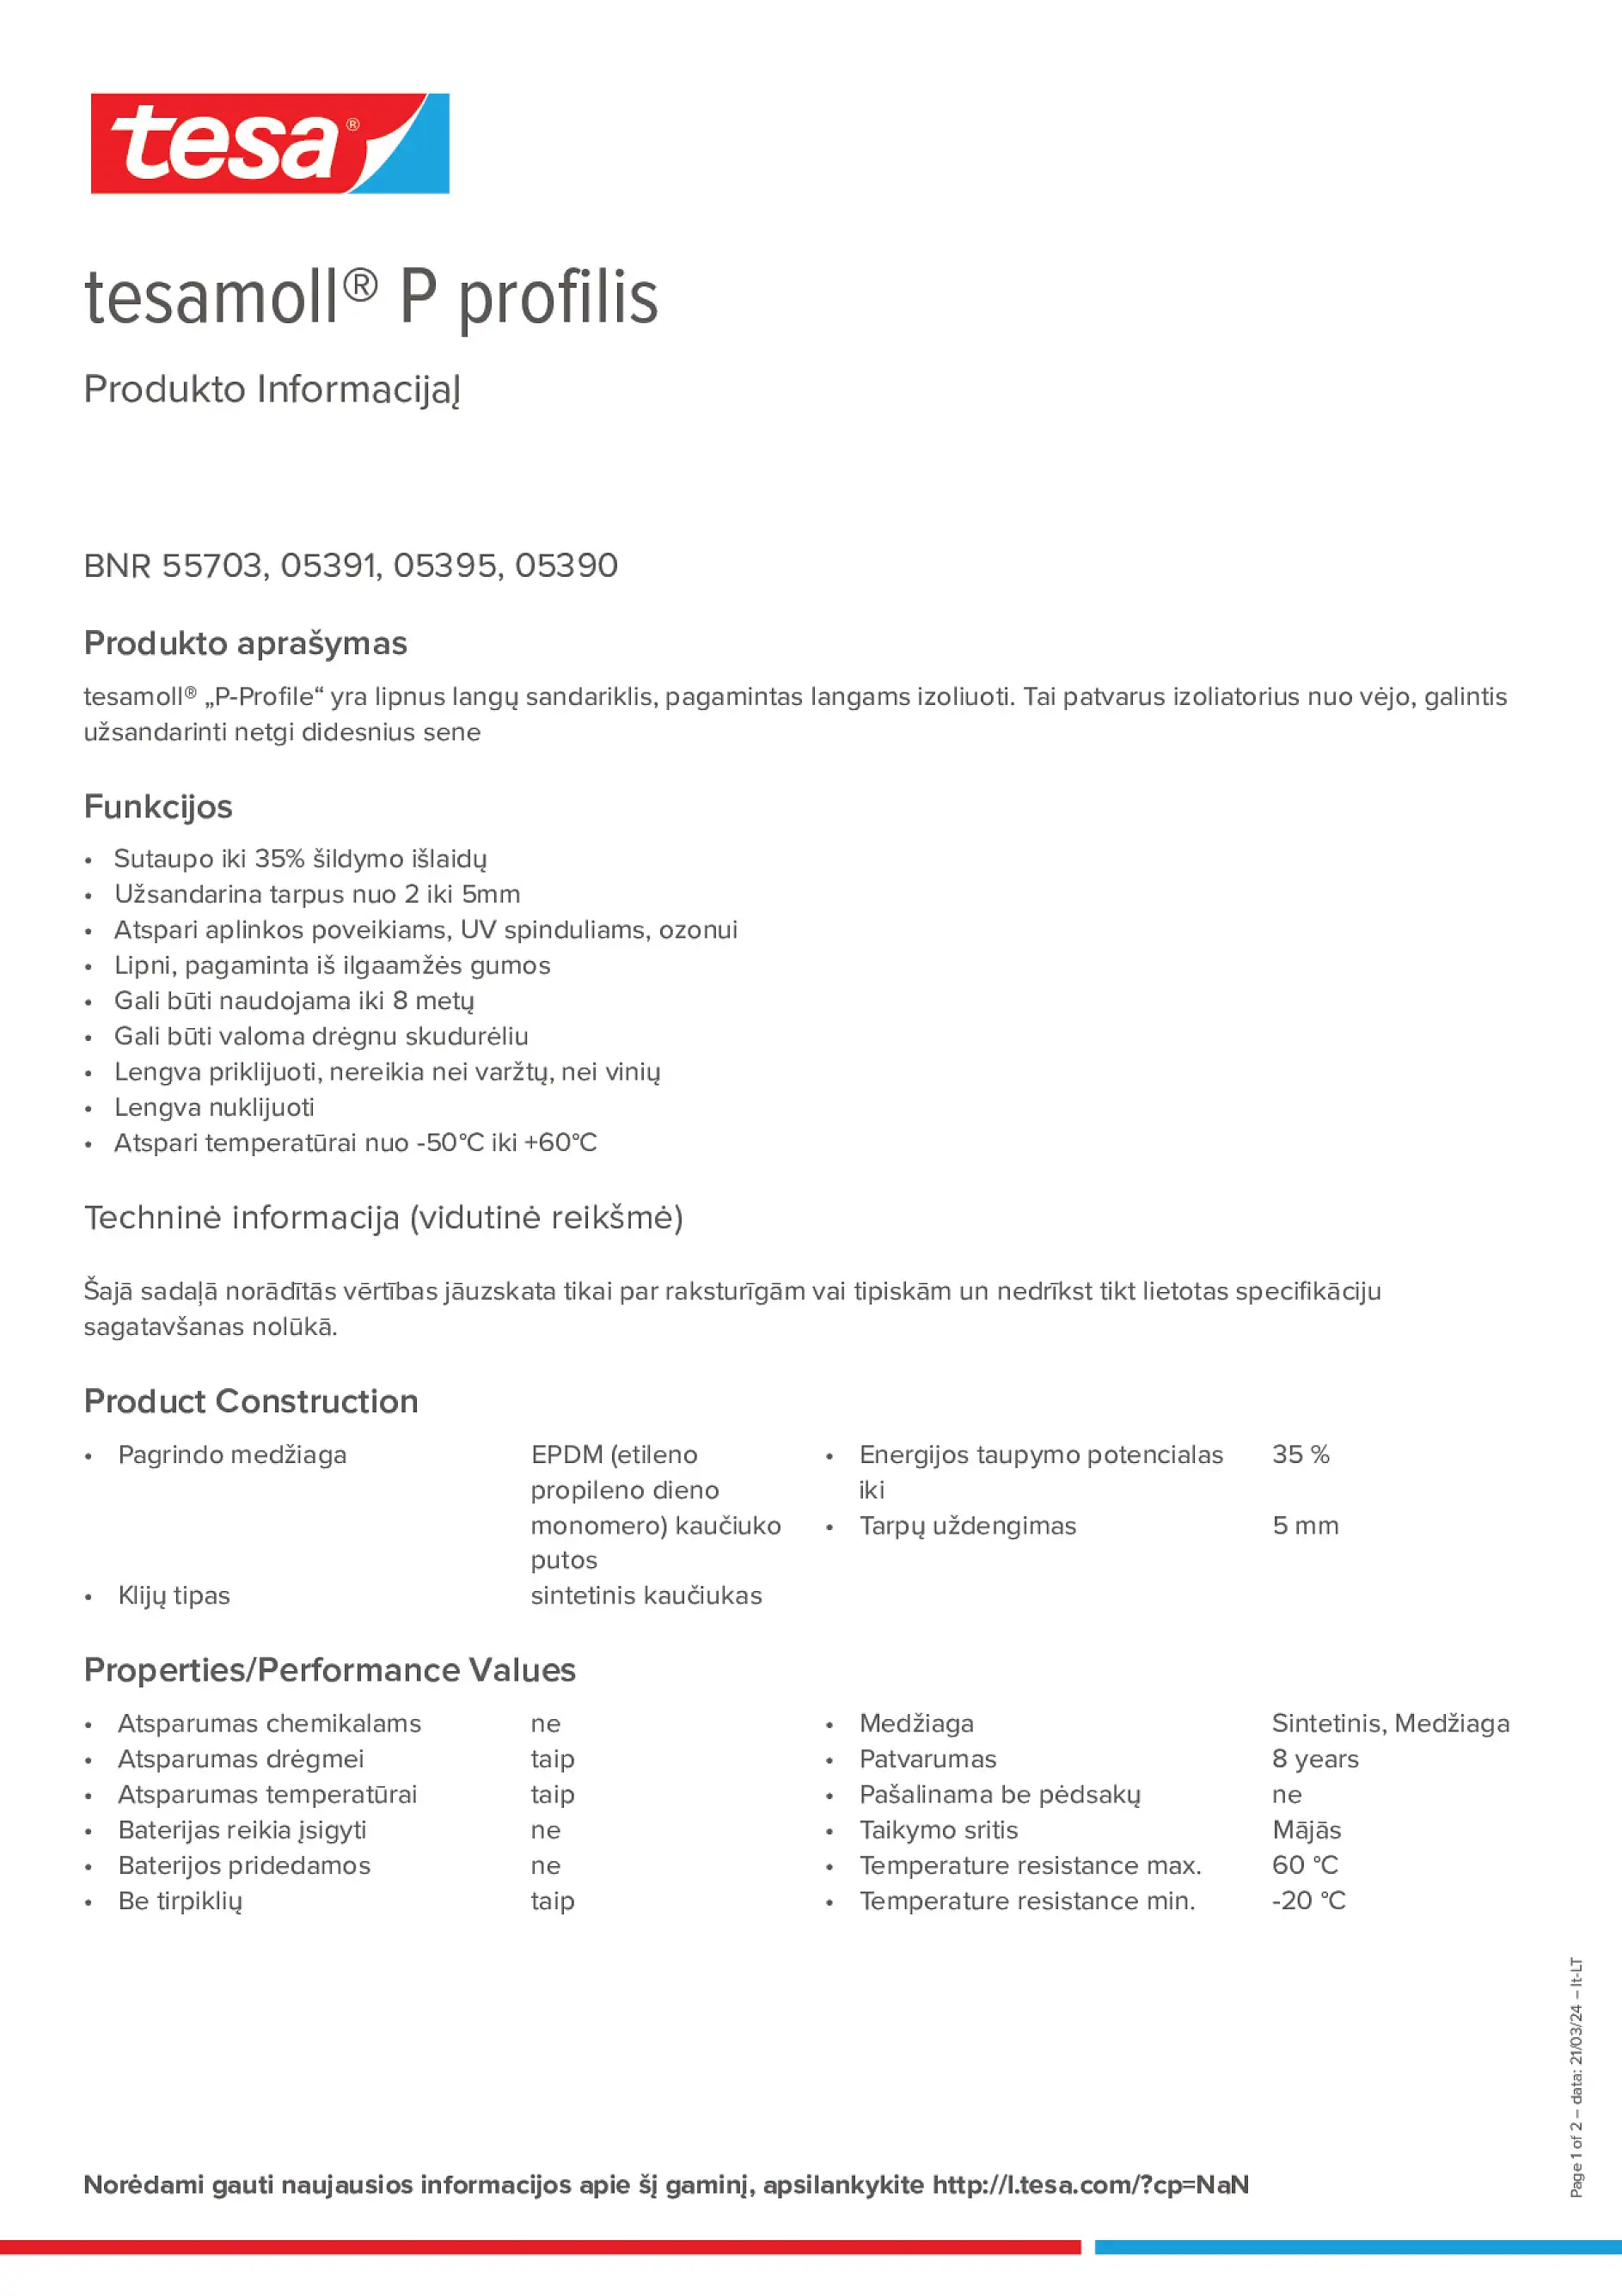 Product information_tesamoll® 5366_lt-LT